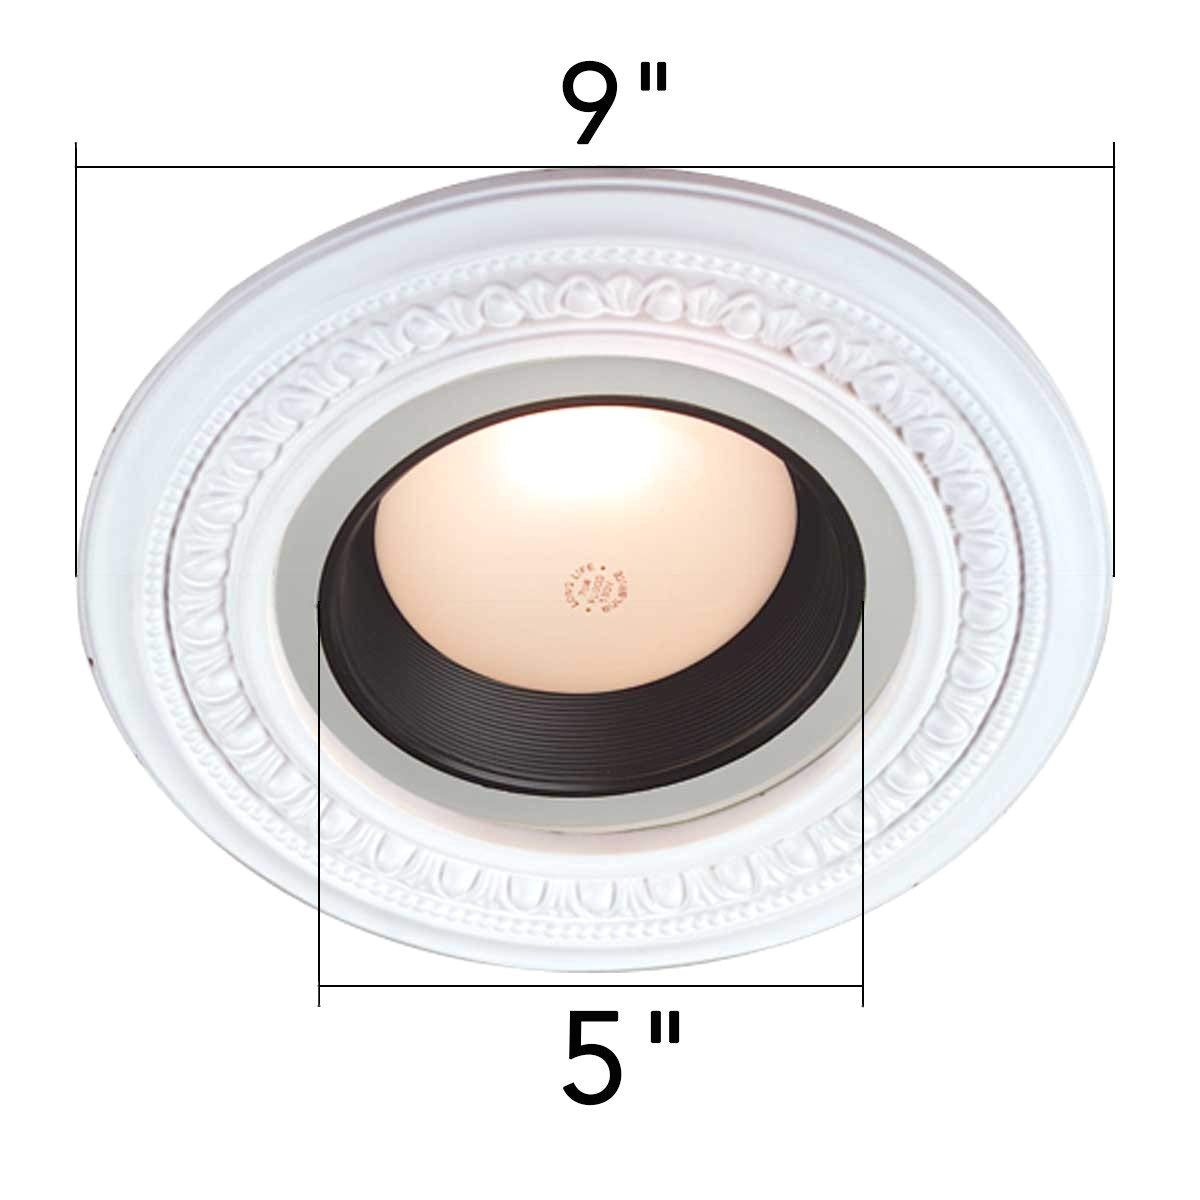 spot light ring white trim 5 id x 9 od mini medallion renovators supply recessed light fixture trims amazon com